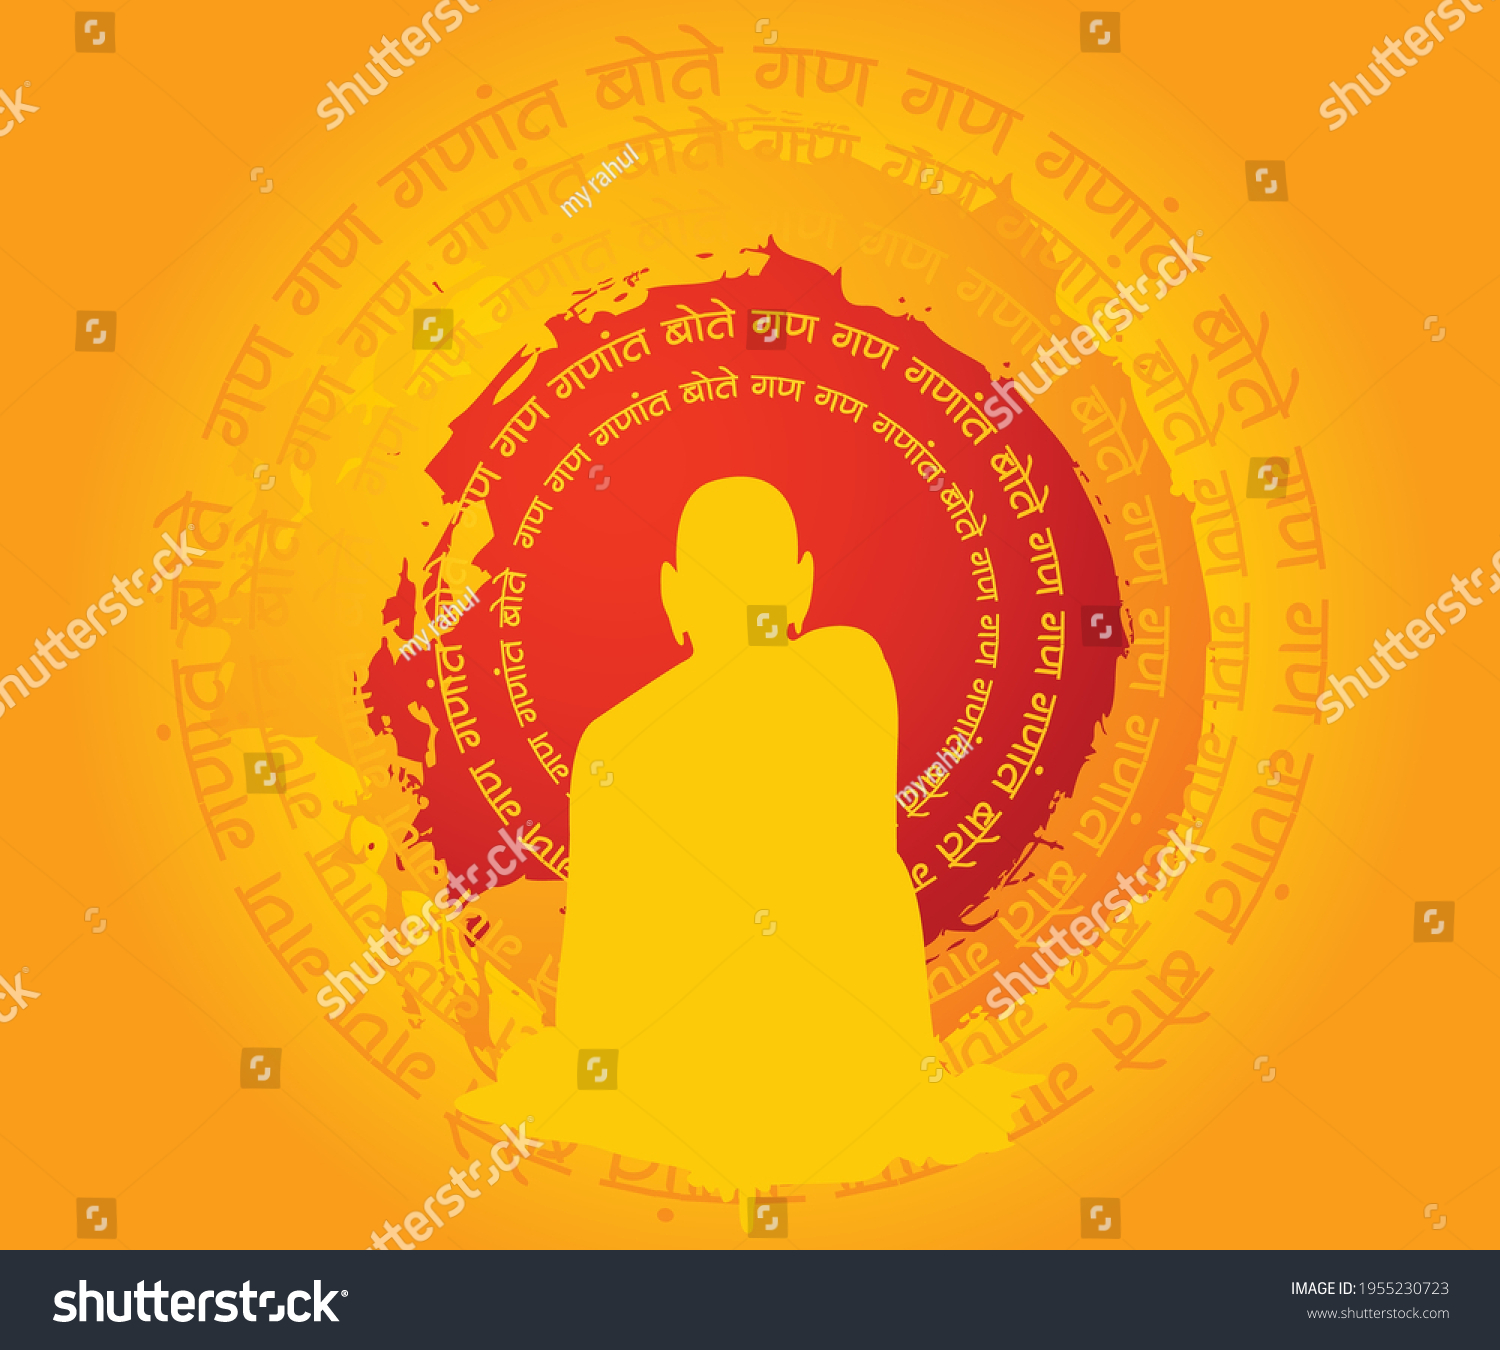 Swami samarth images stock photos vectors